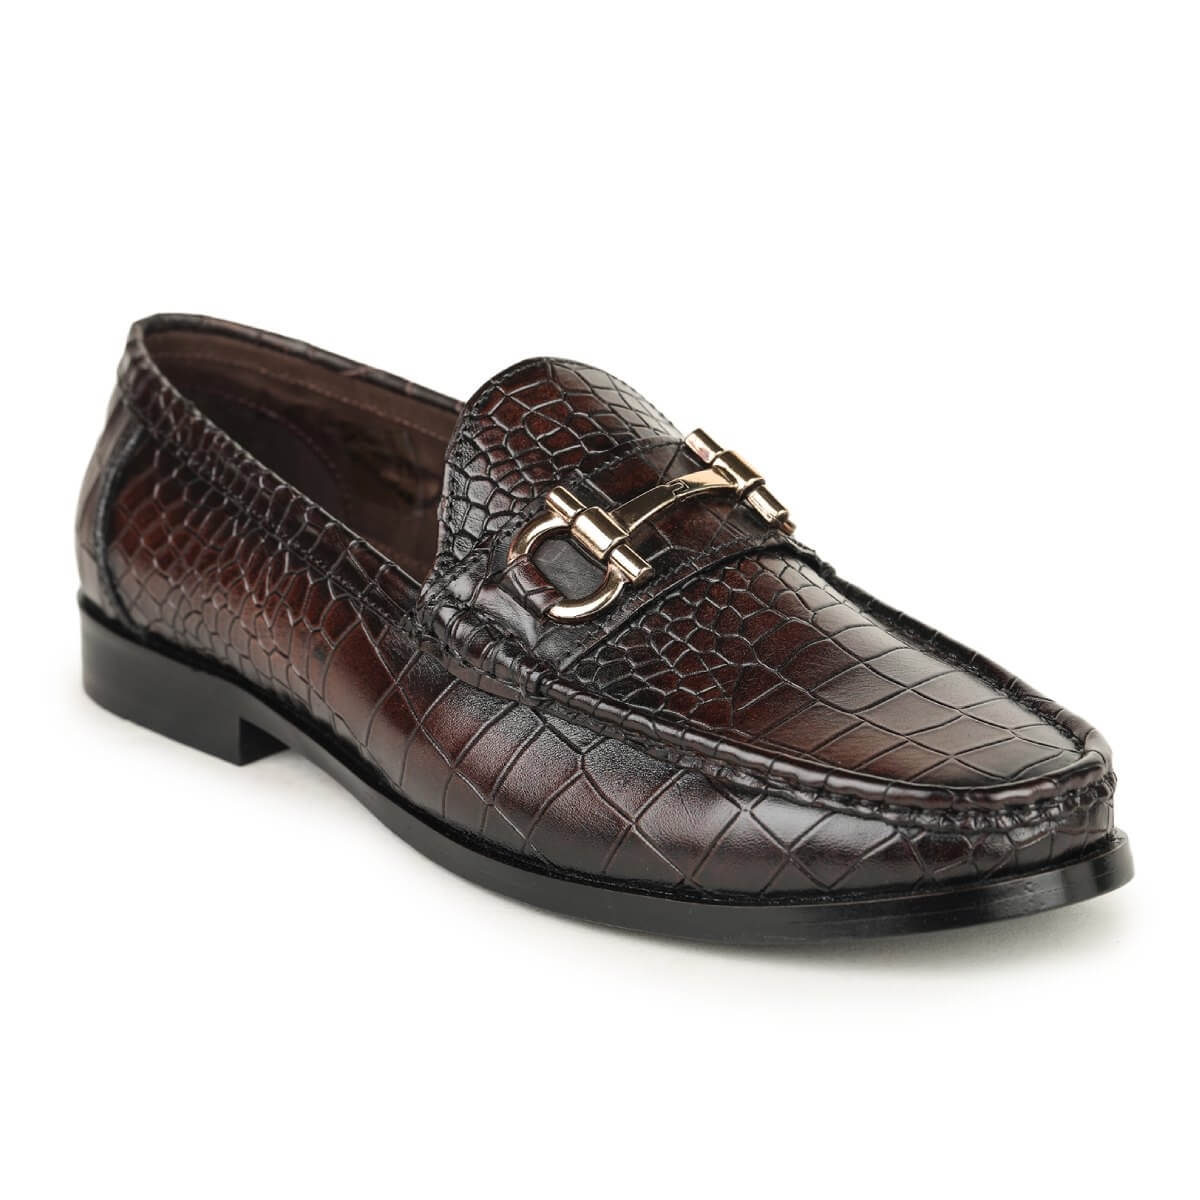 crocs loafer shoes brown_3